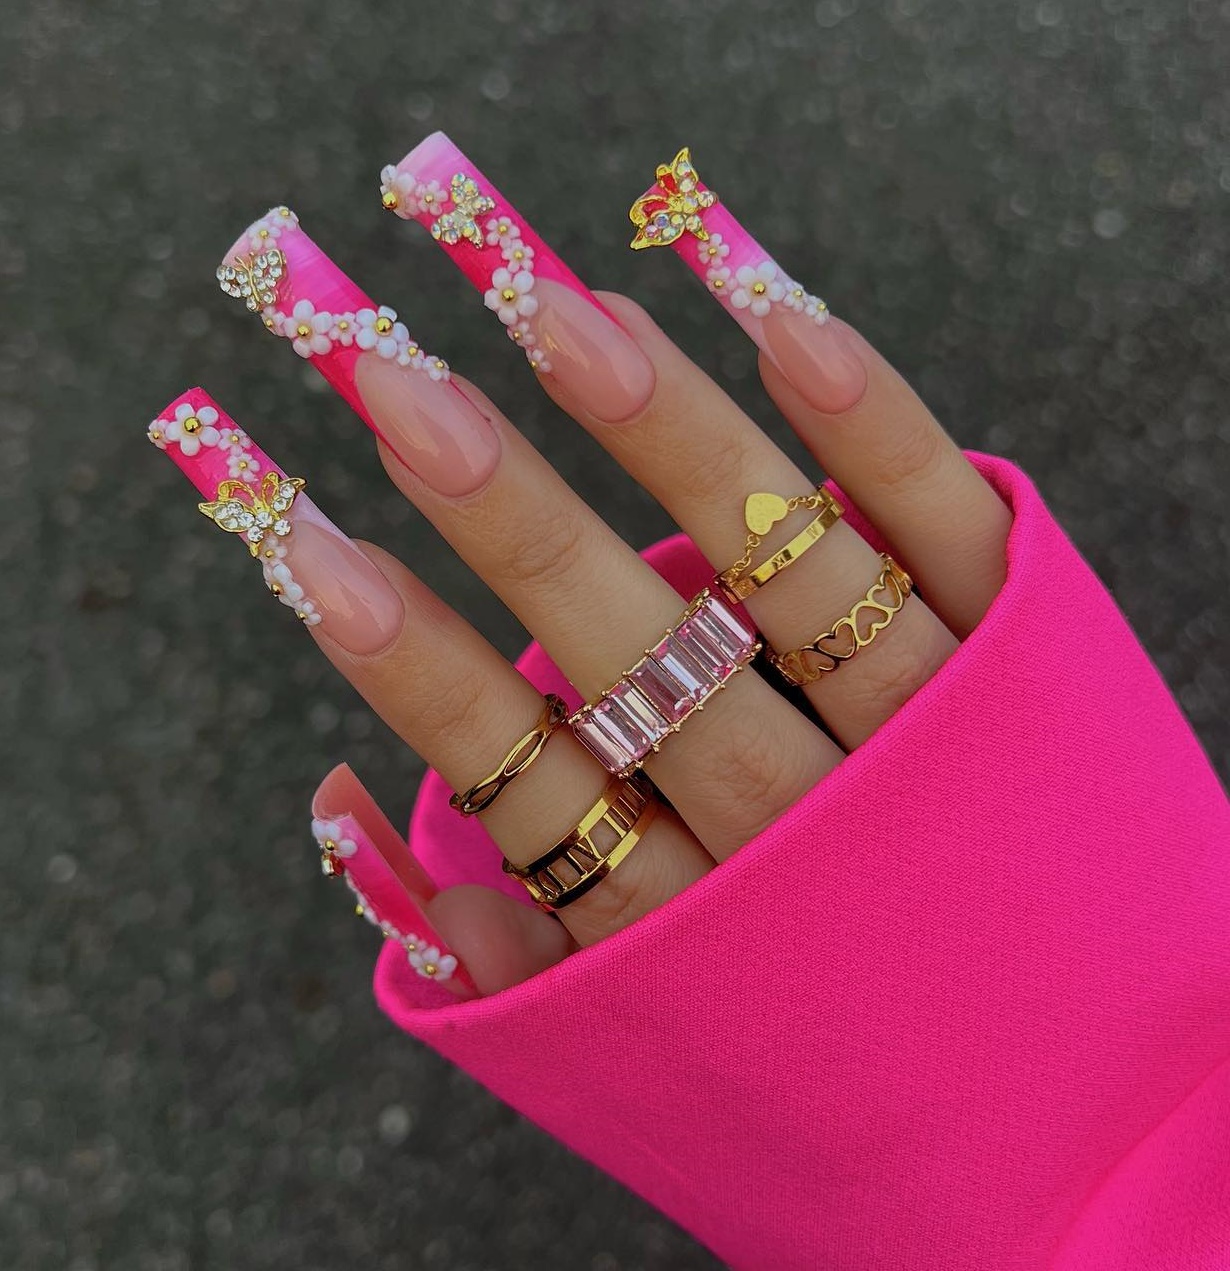 Lange vierkante roze nagels met 3D vlinder ontwerp